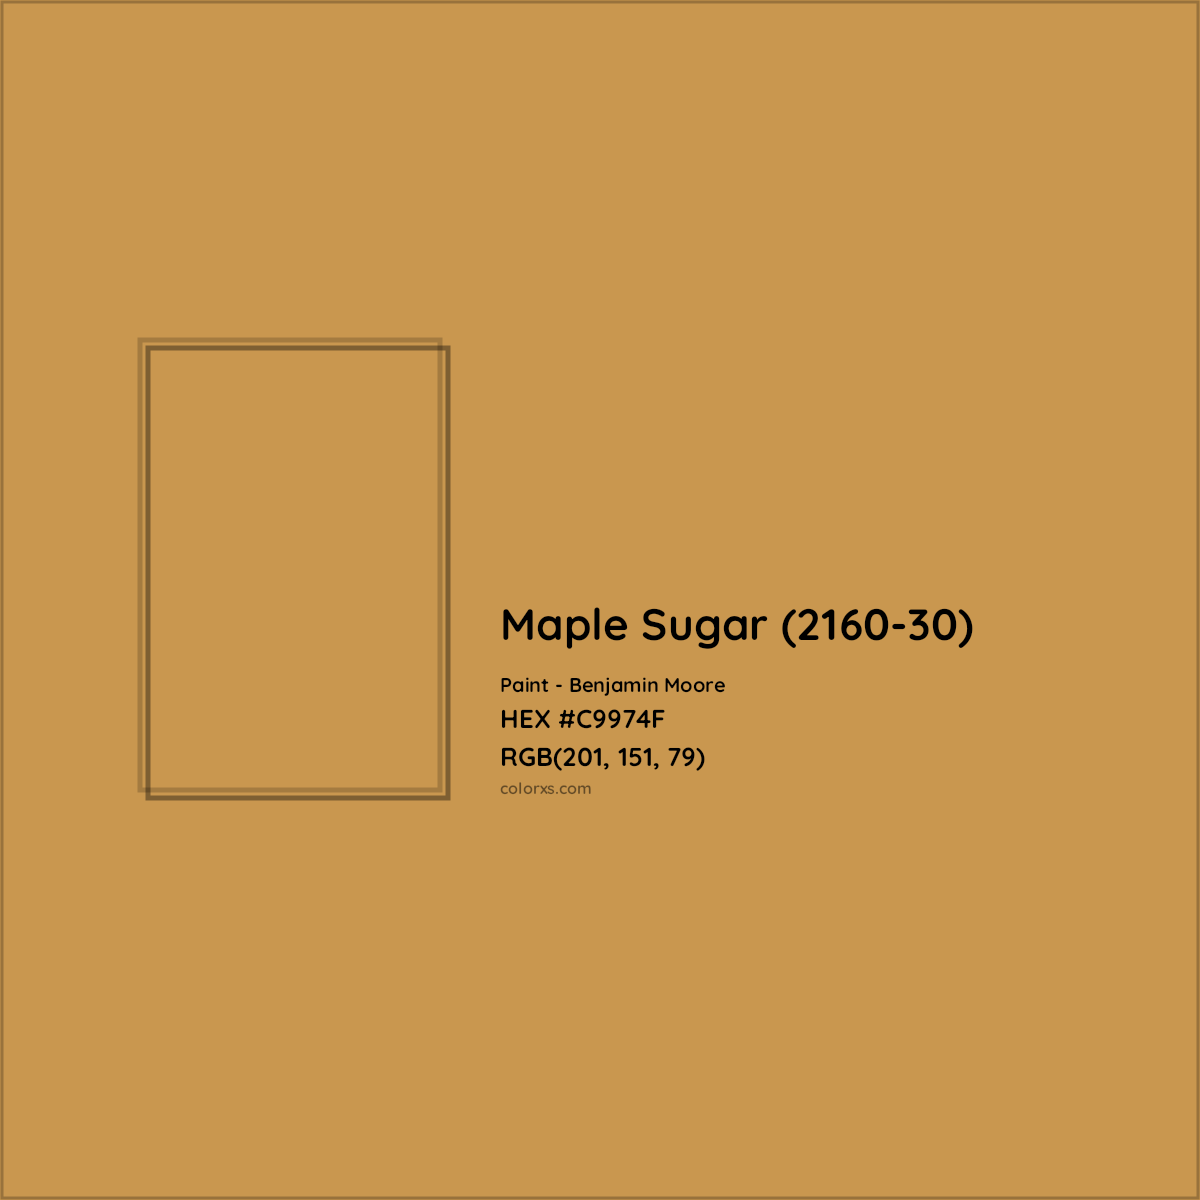 HEX #C9974F Maple Sugar (2160-30) Paint Benjamin Moore - Color Code